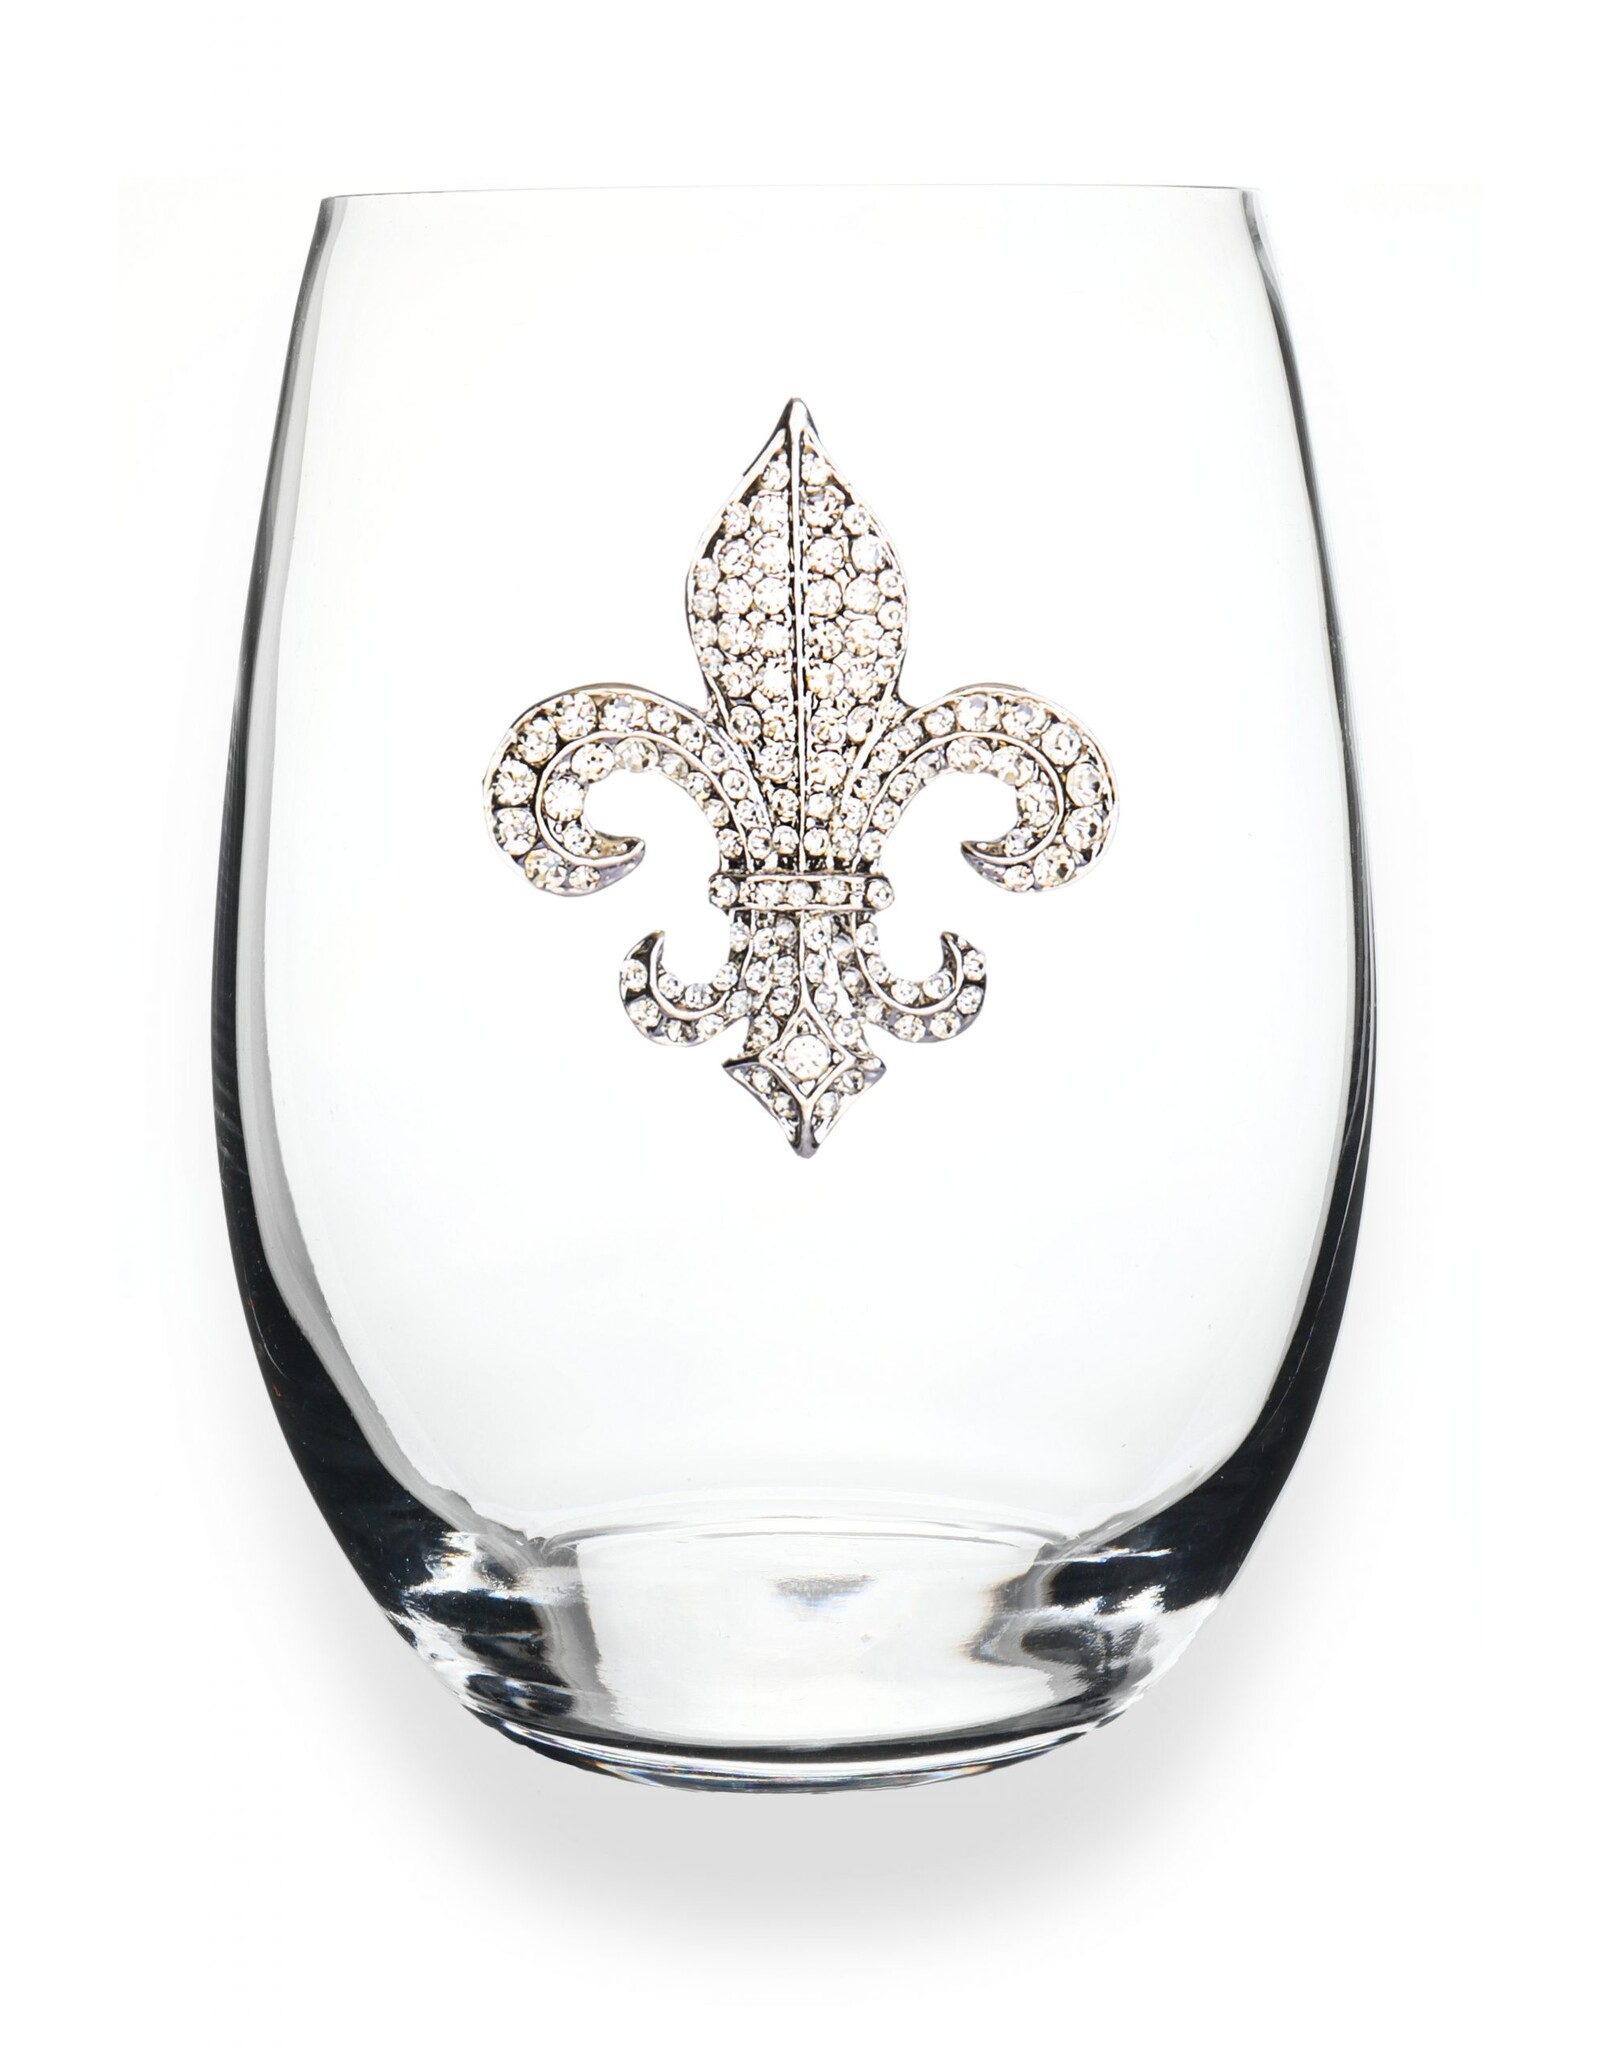 The Queen's Jewels Diamond Fleur de Lis Jeweled Stemless Wine